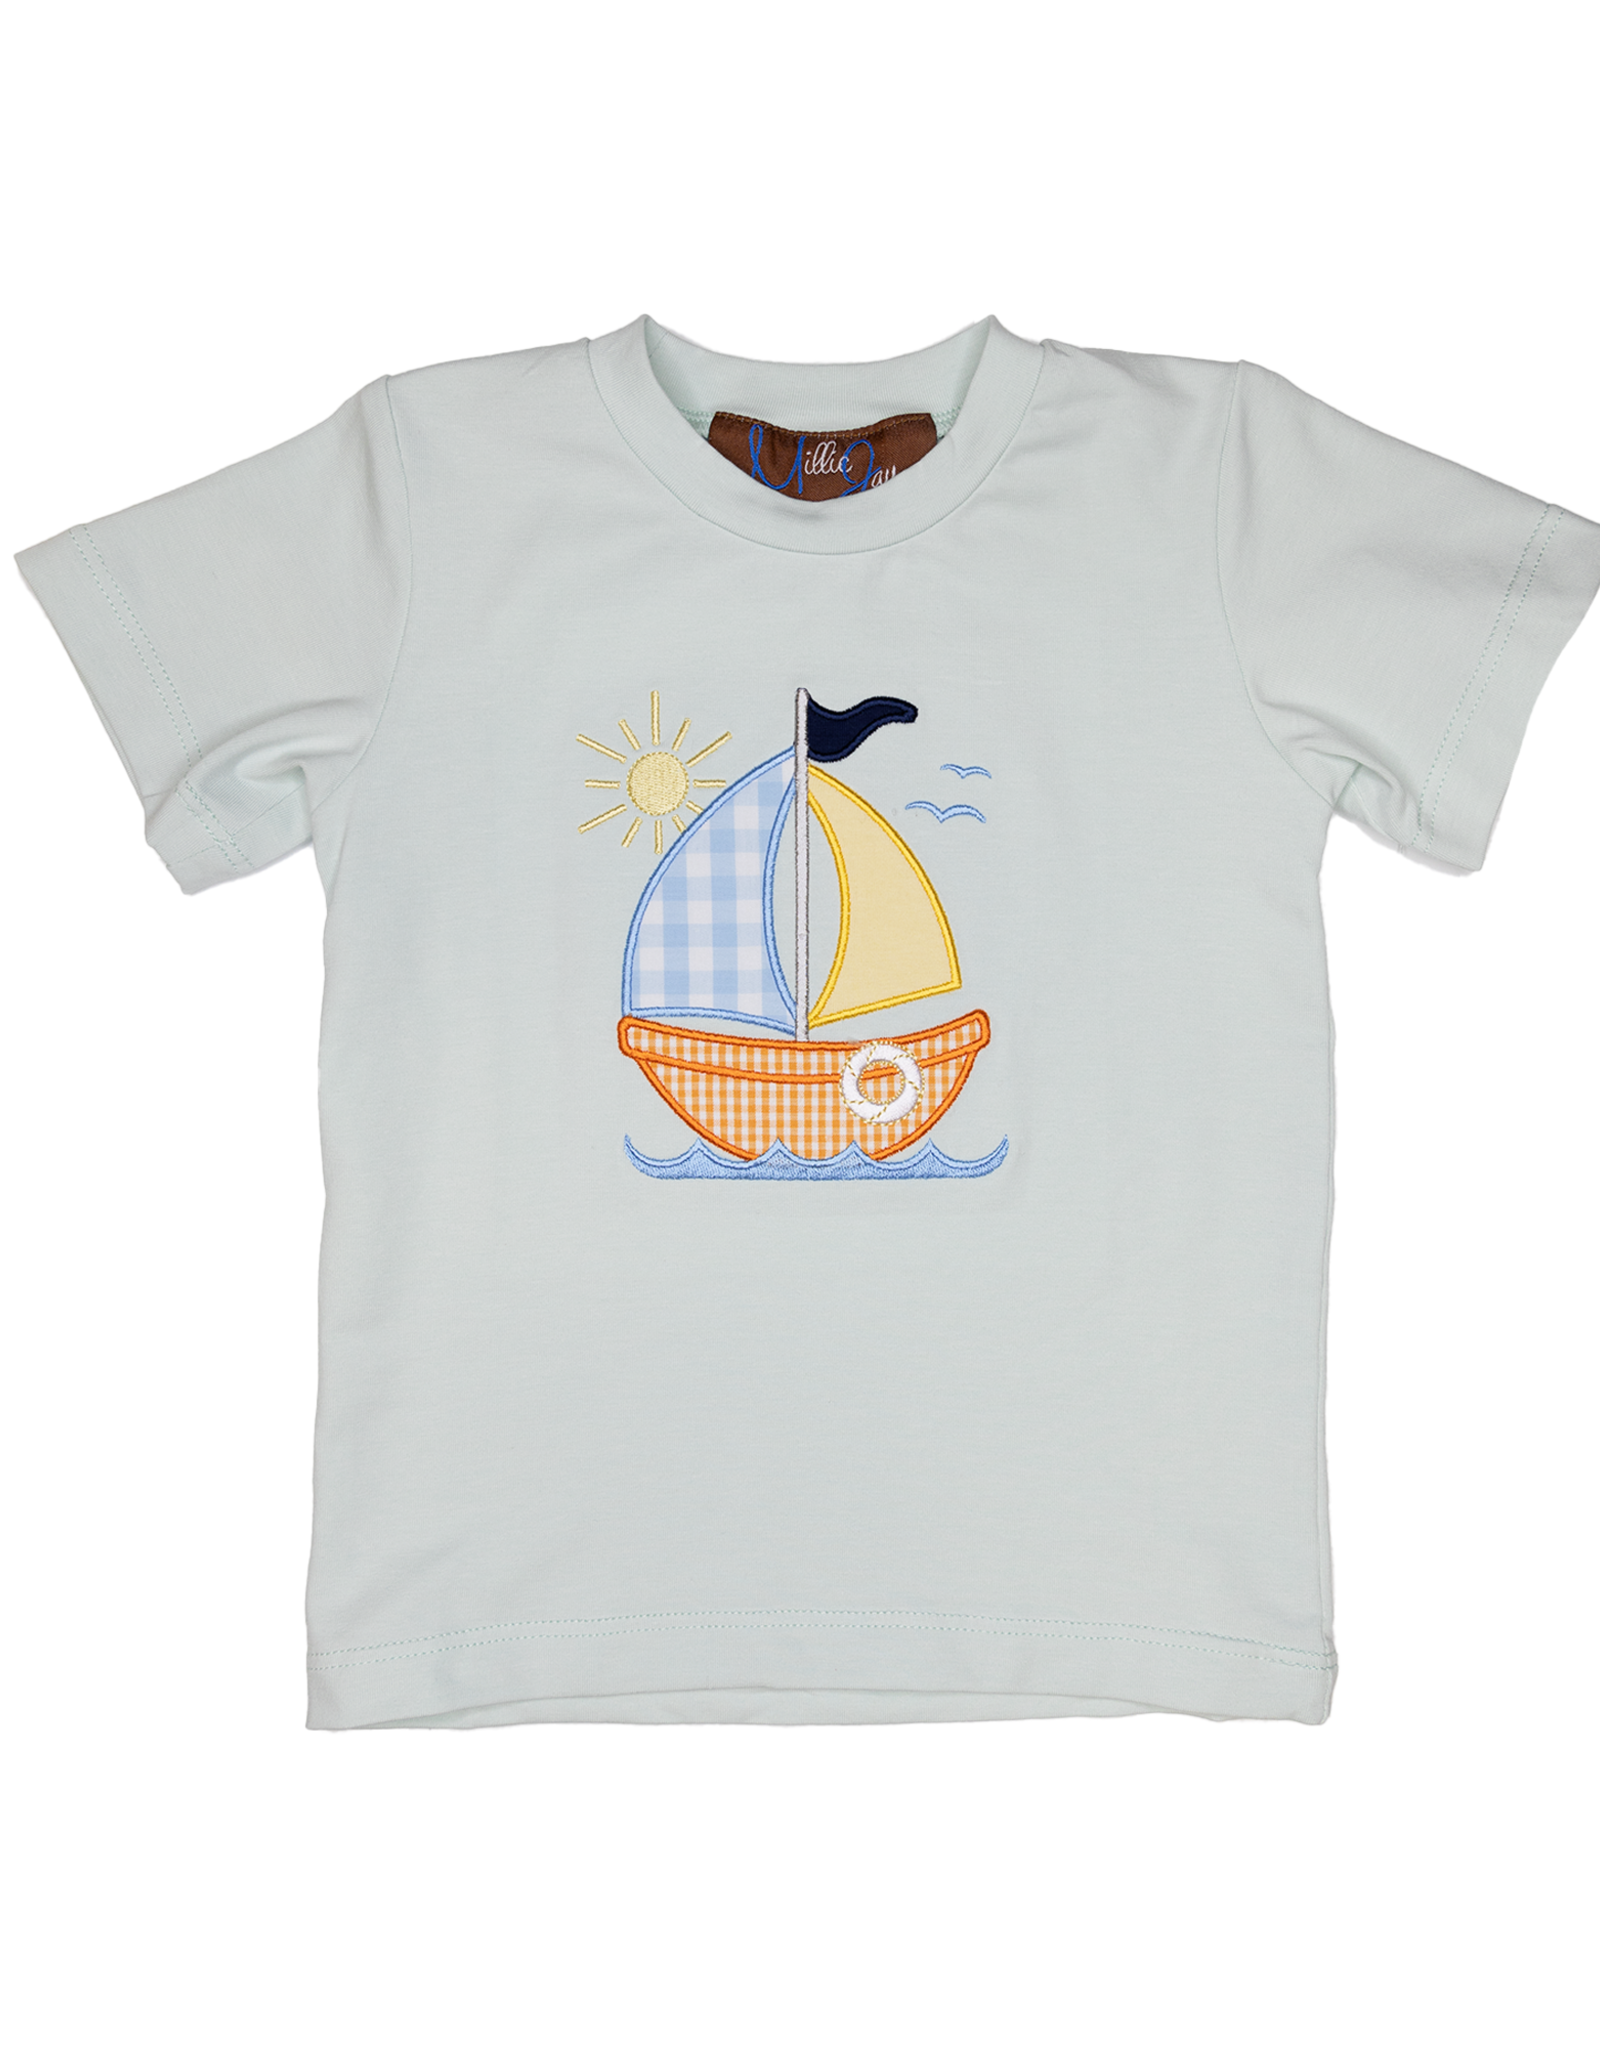 Millie Jay 527 Just Sailing Shirt